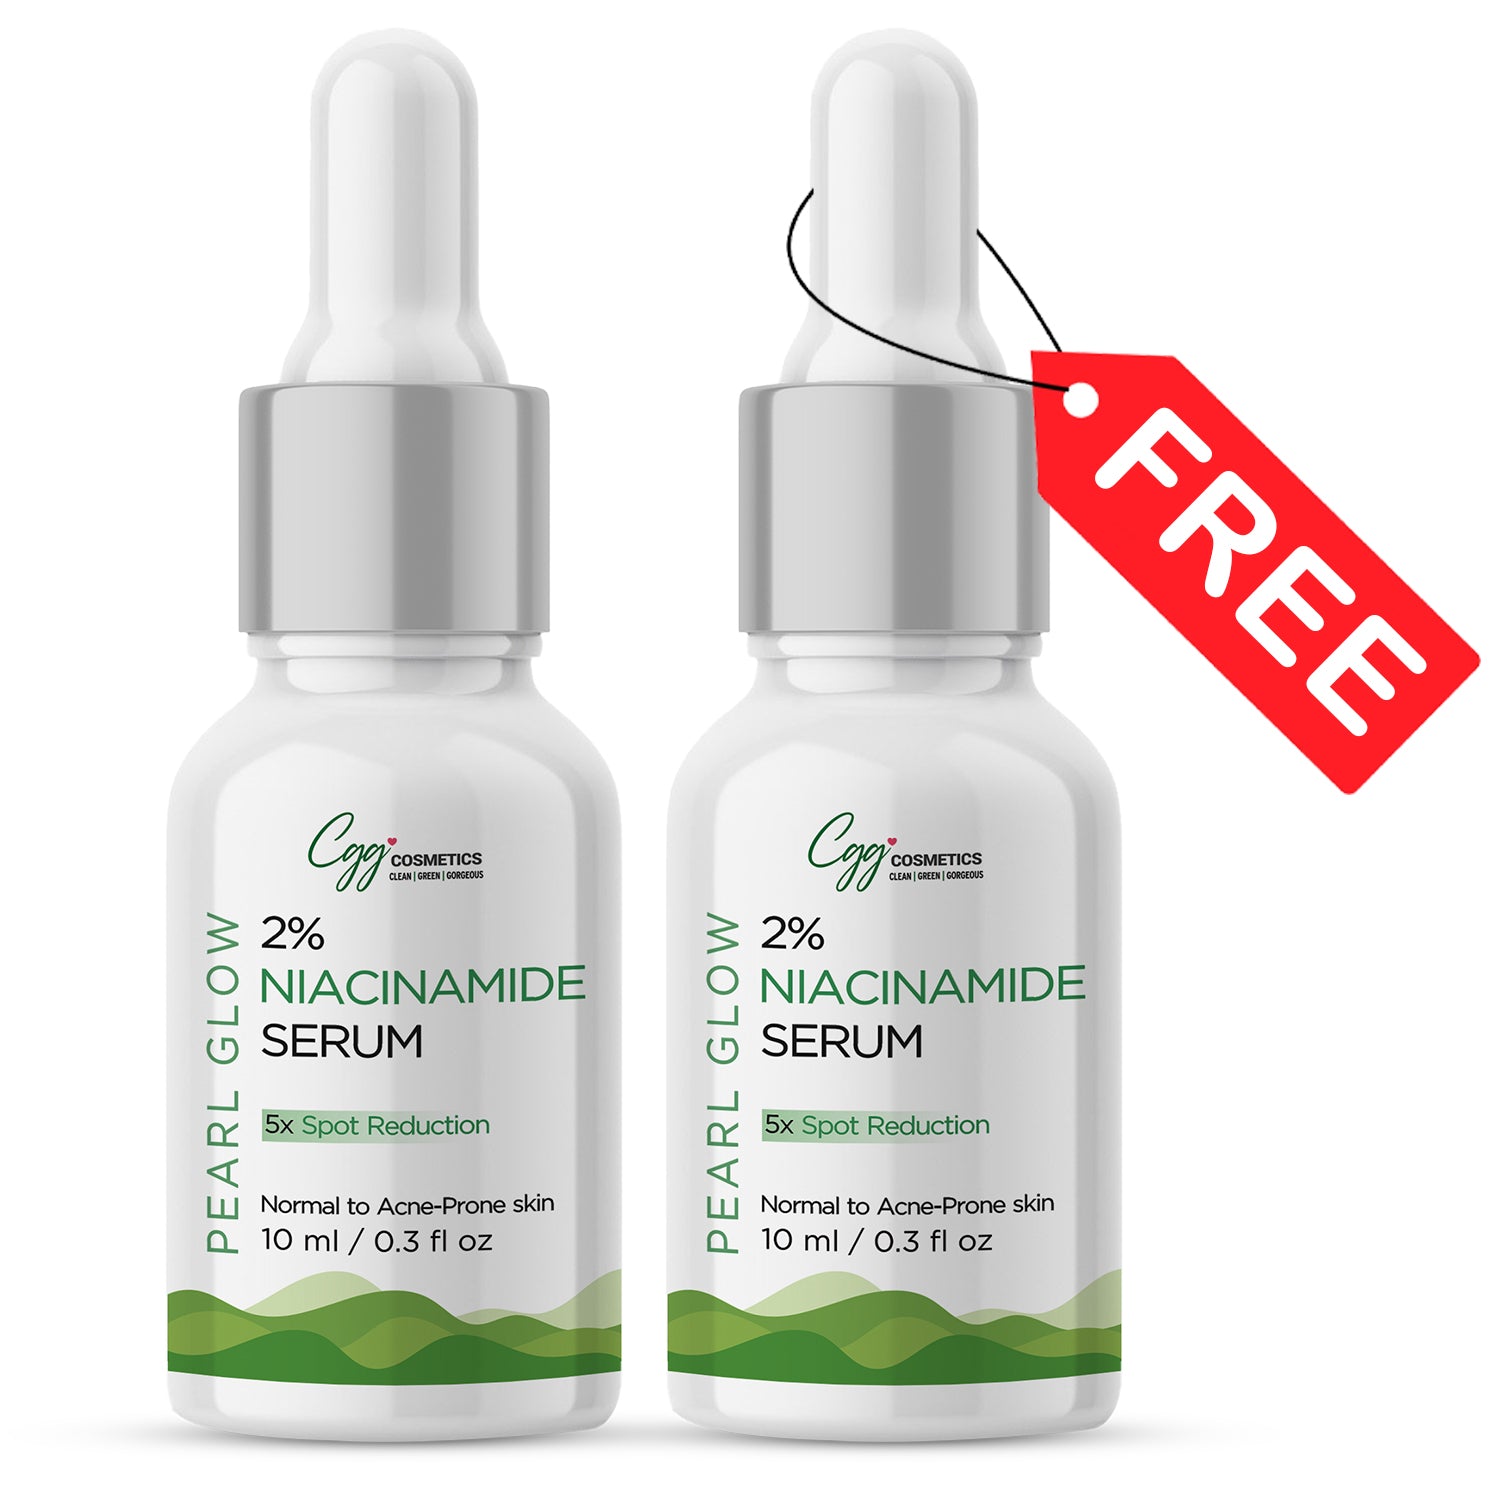 CGG Cosmetics 2% Niacinamide Serum 10ml & GET FREE 10ml 2% Niacinamide Serum - 5X Spot Reduction